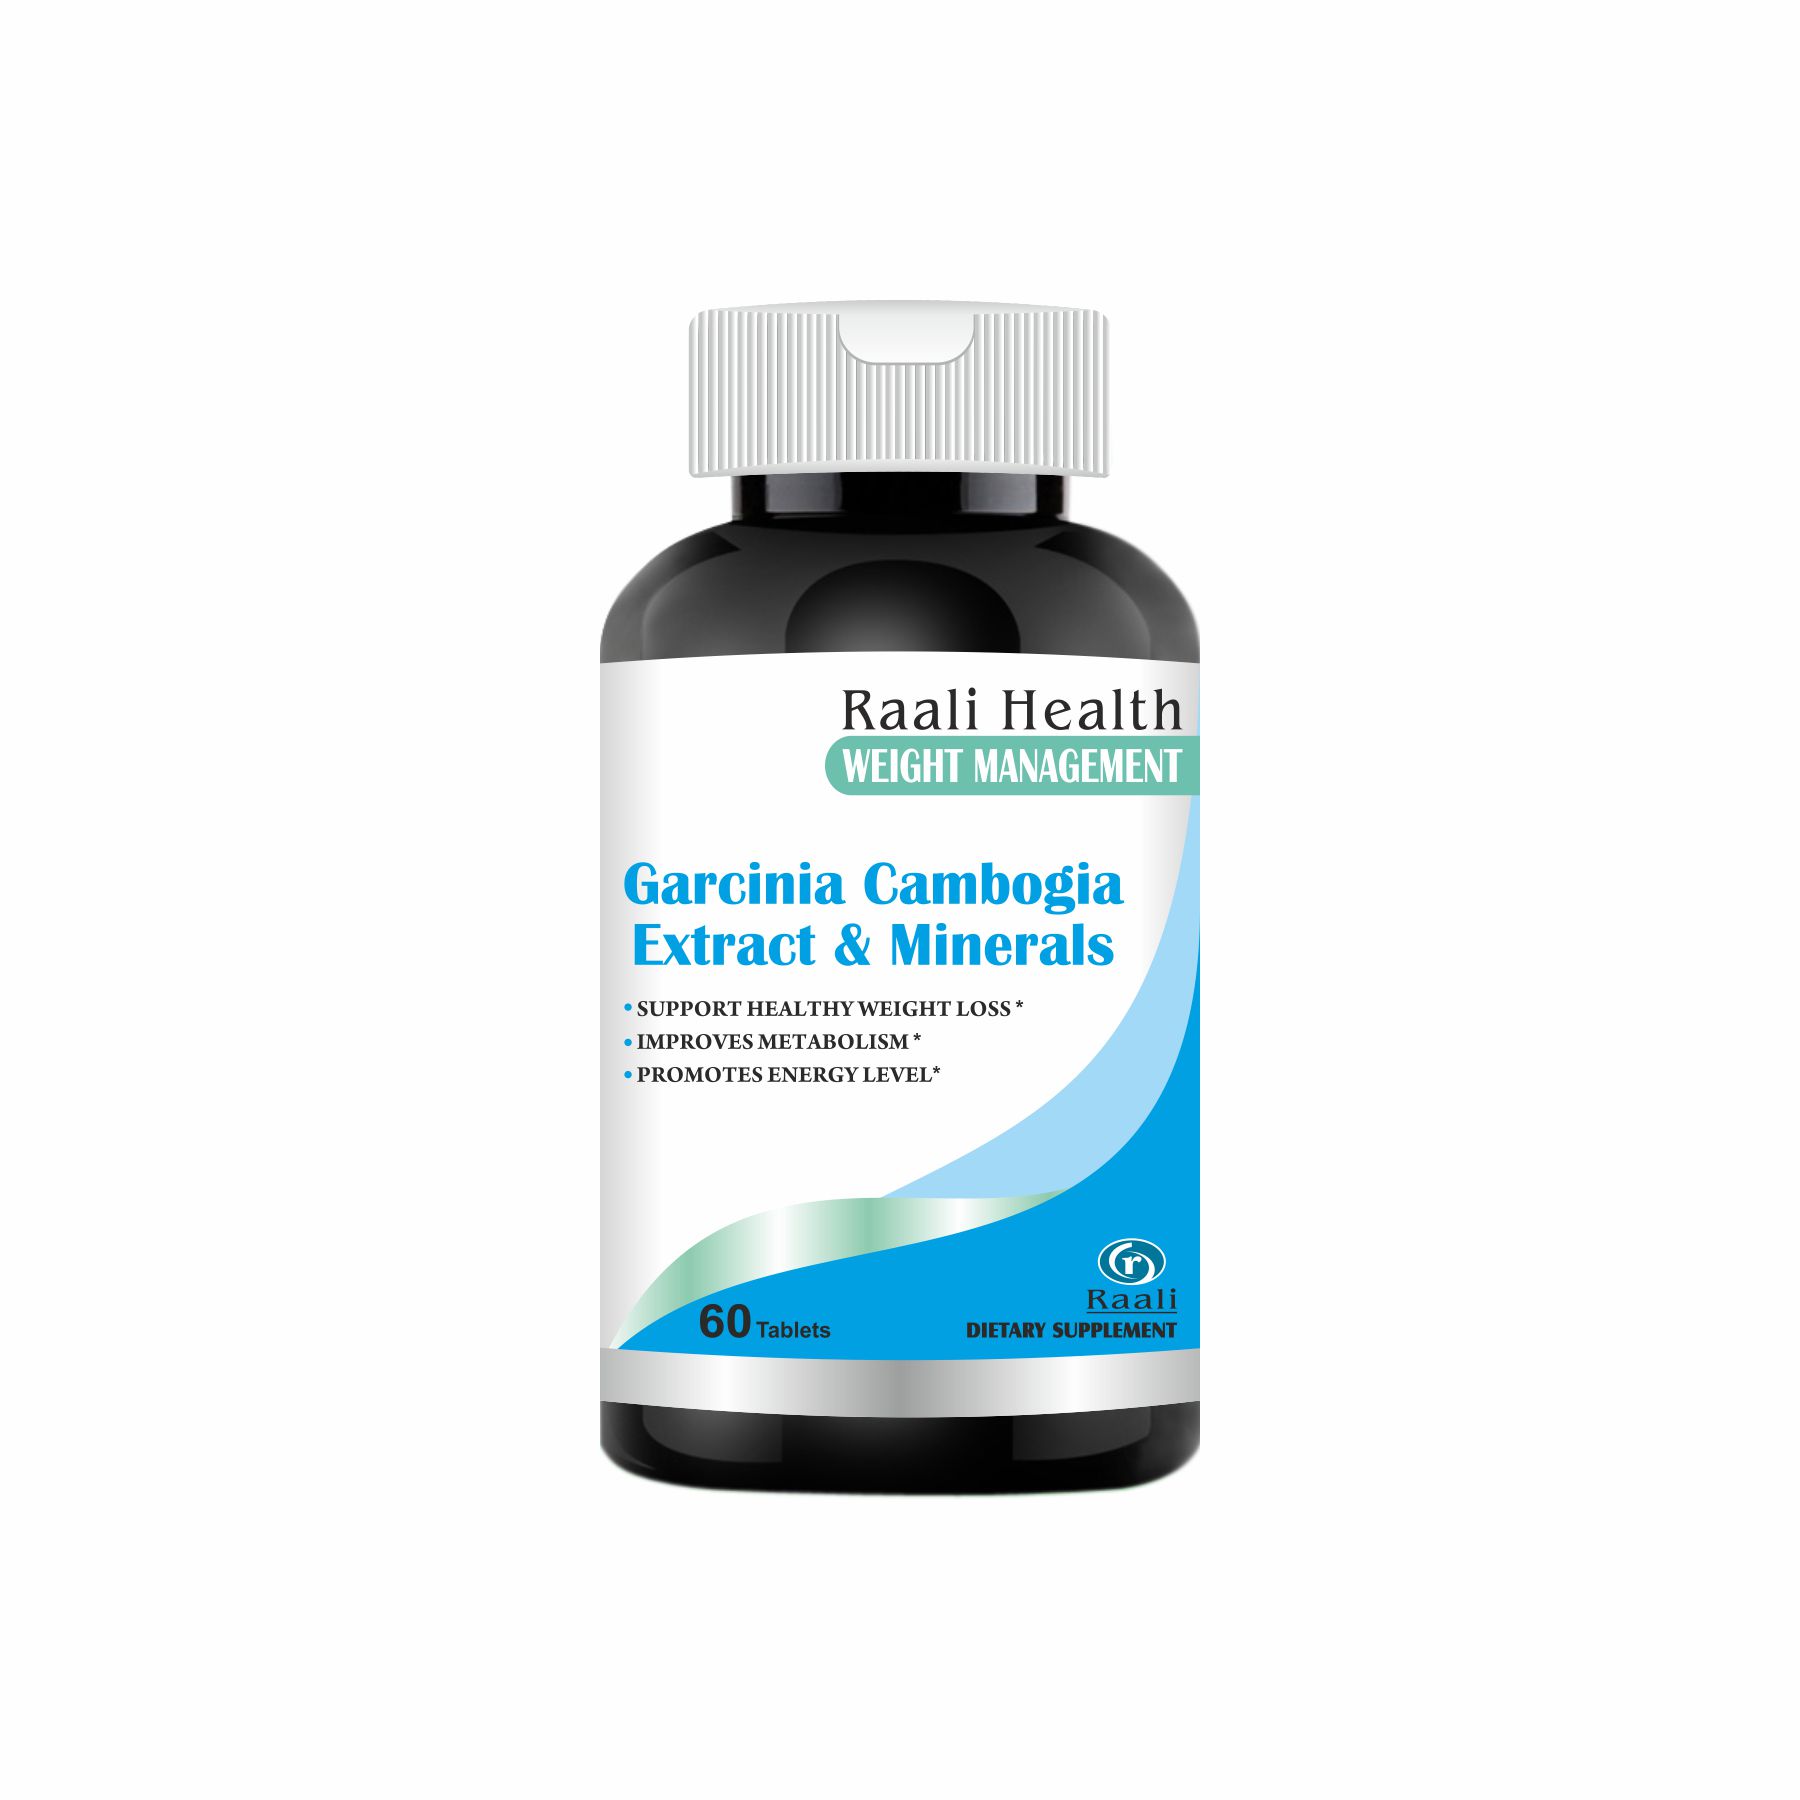 Garcinia combogia extract & minerals, weight loss, improve metabolism, boost energy